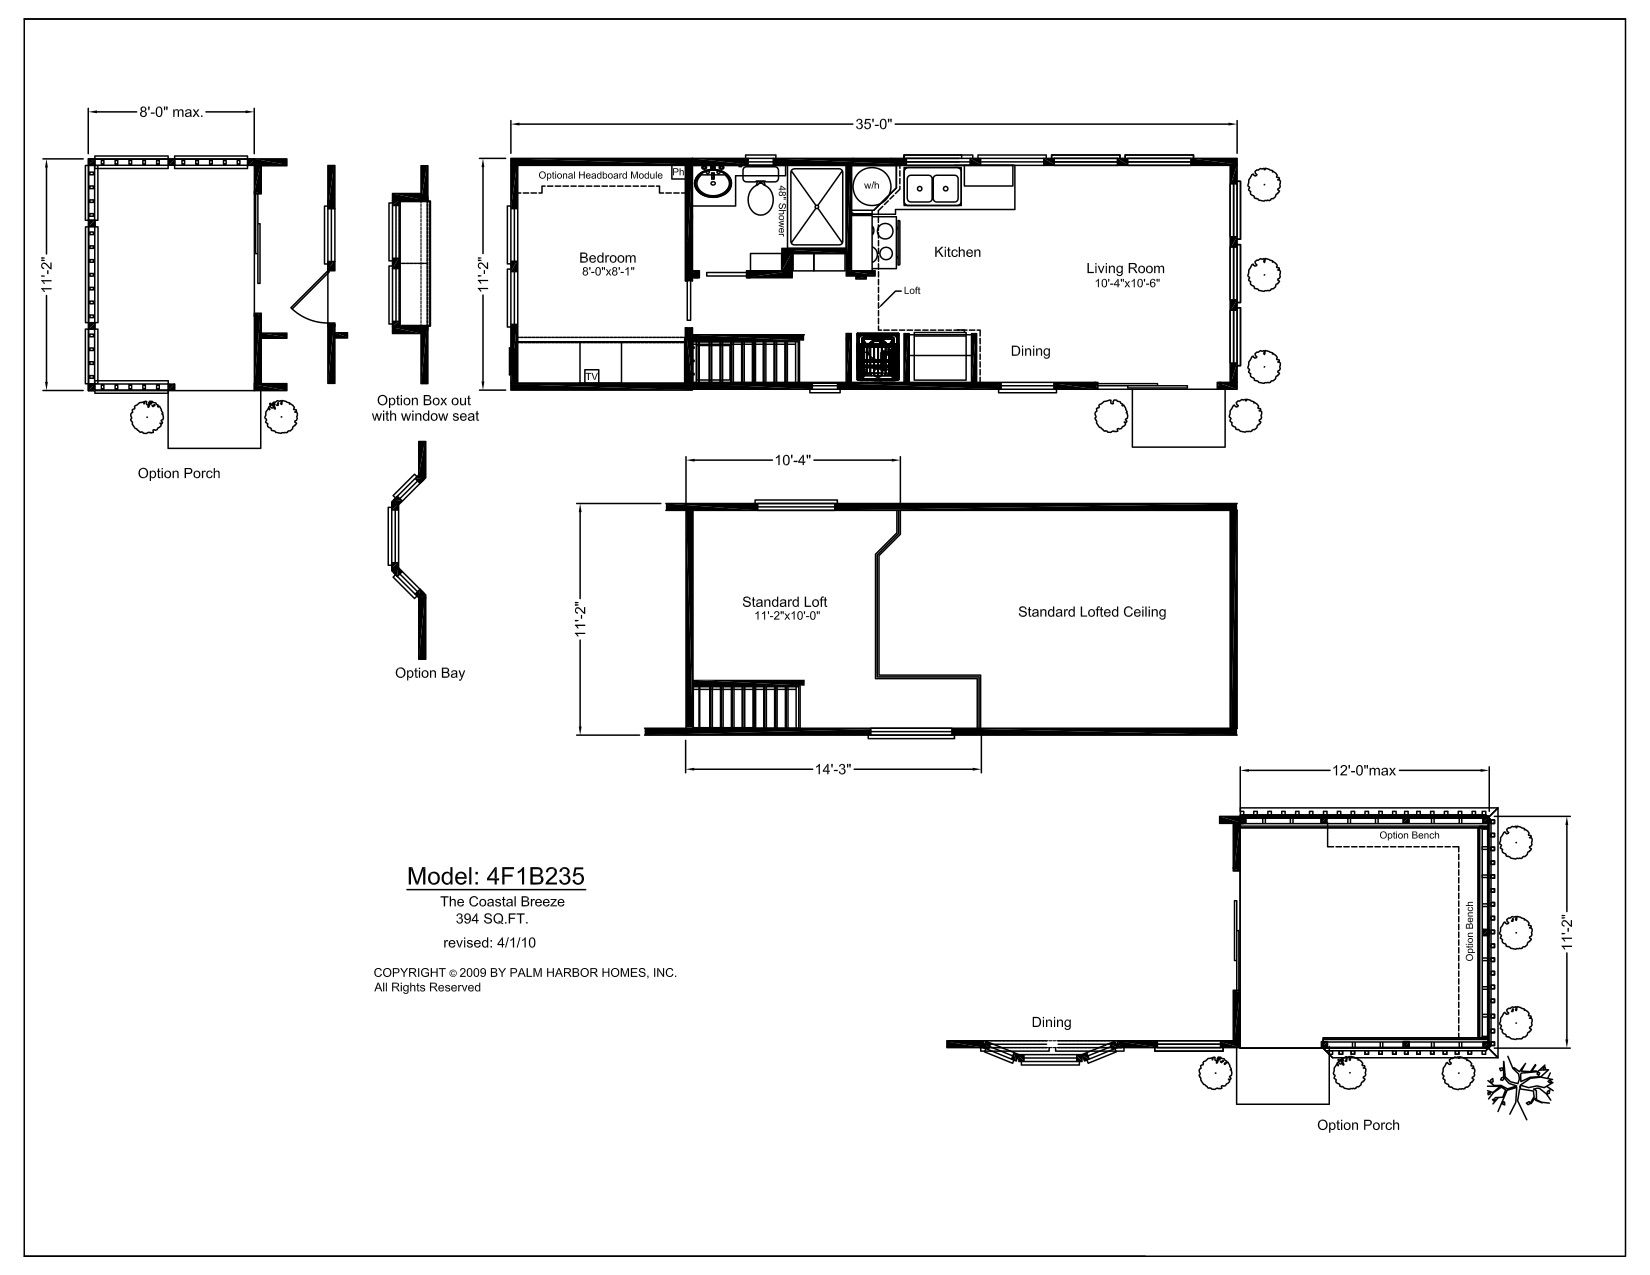 Homes Direct Modular Homes - Model 4F1B235 - Floorplan